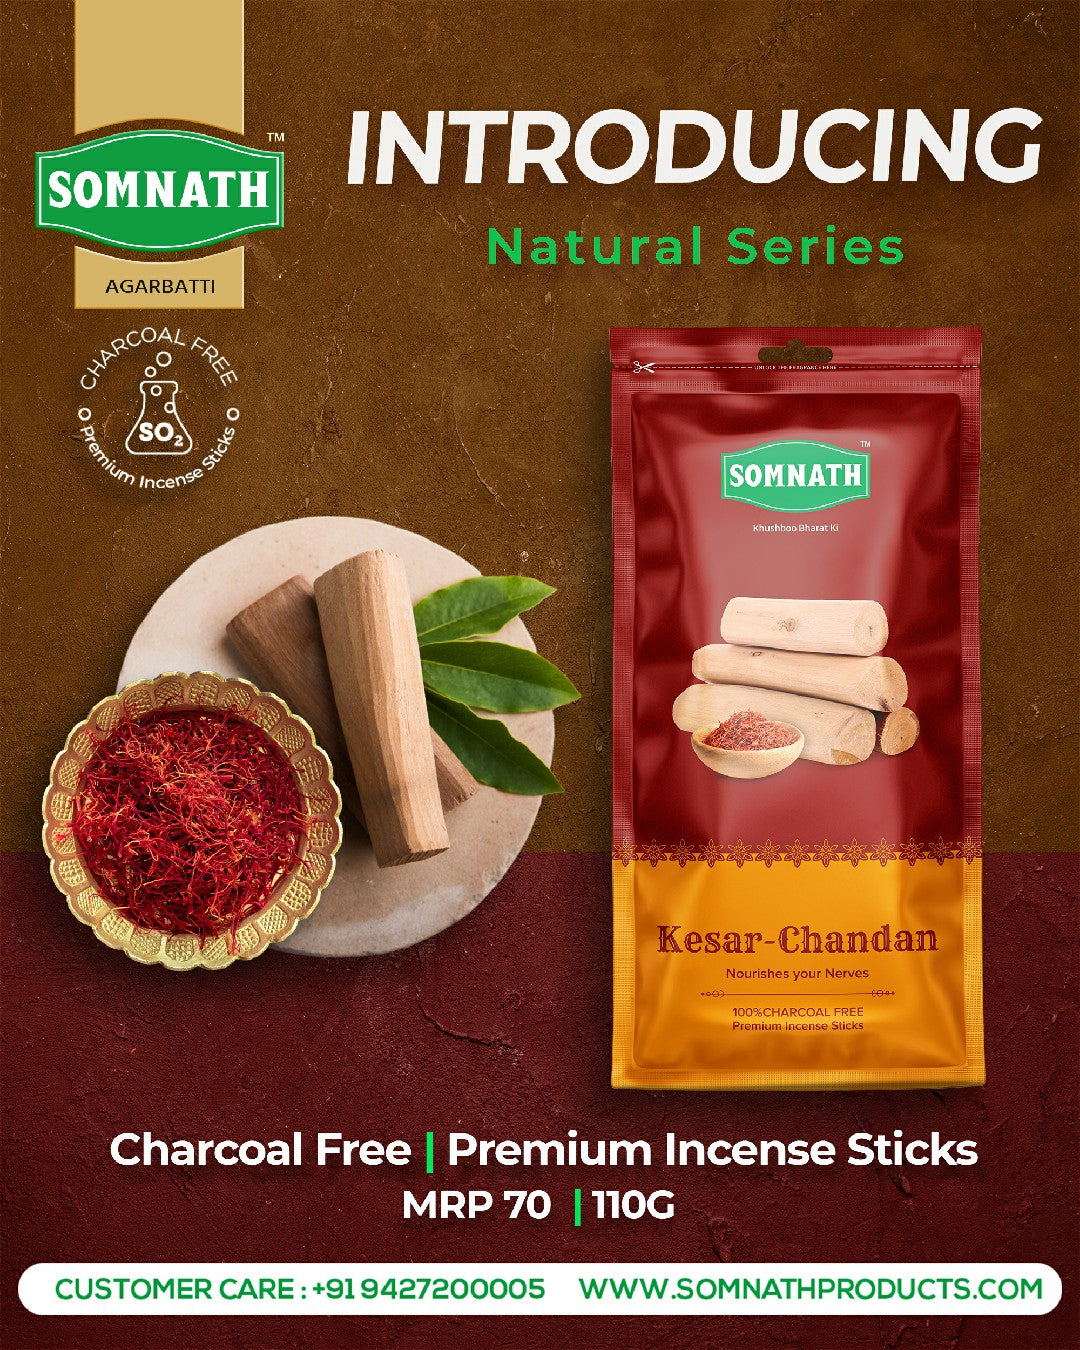 Kesar Chandan Agarbatti |100% Charcoal Free Incense Sticks.